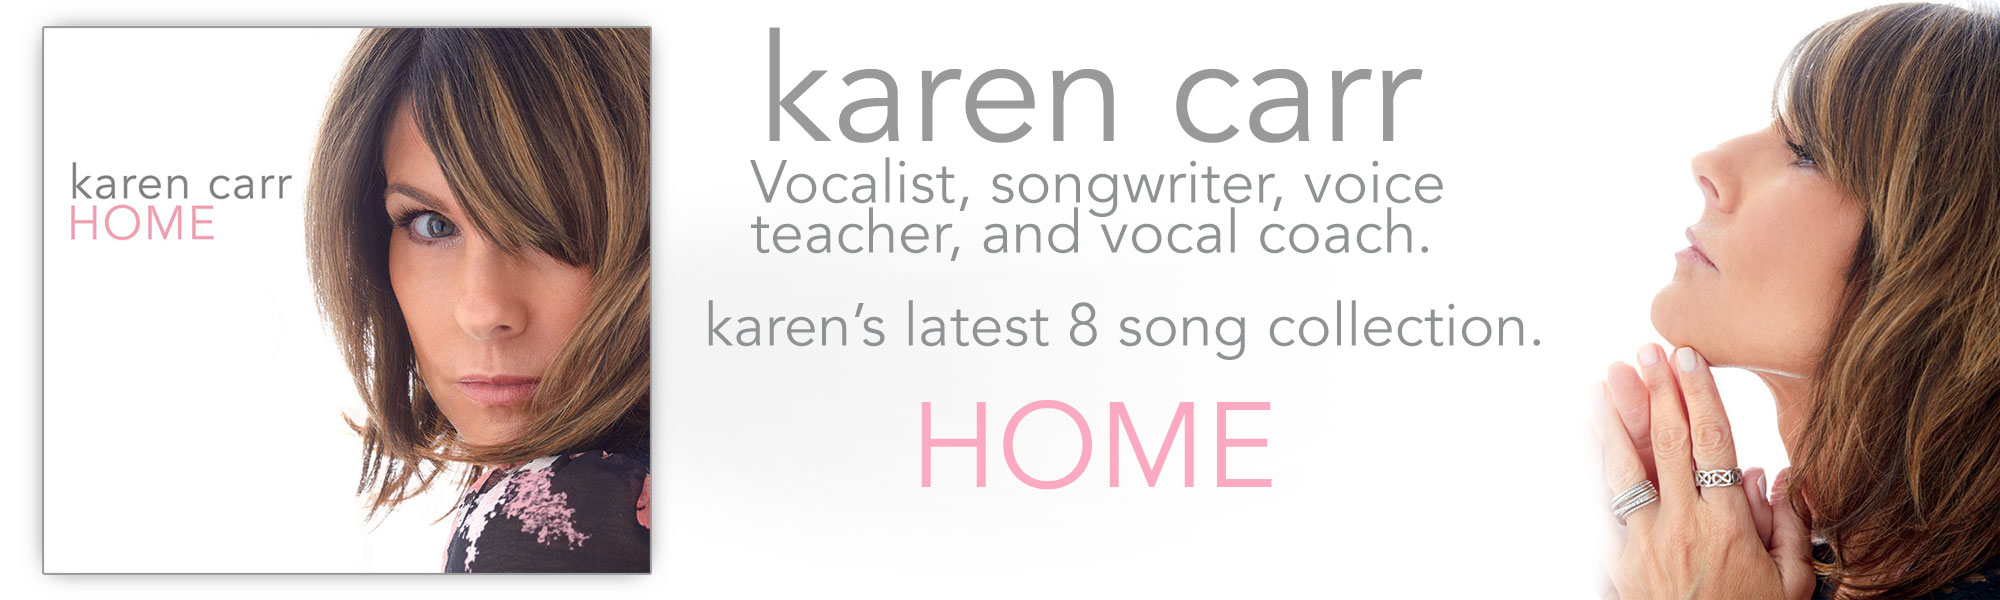 Karen Carr. Vocalist, songwriter, voice teacher, and vocal coach.